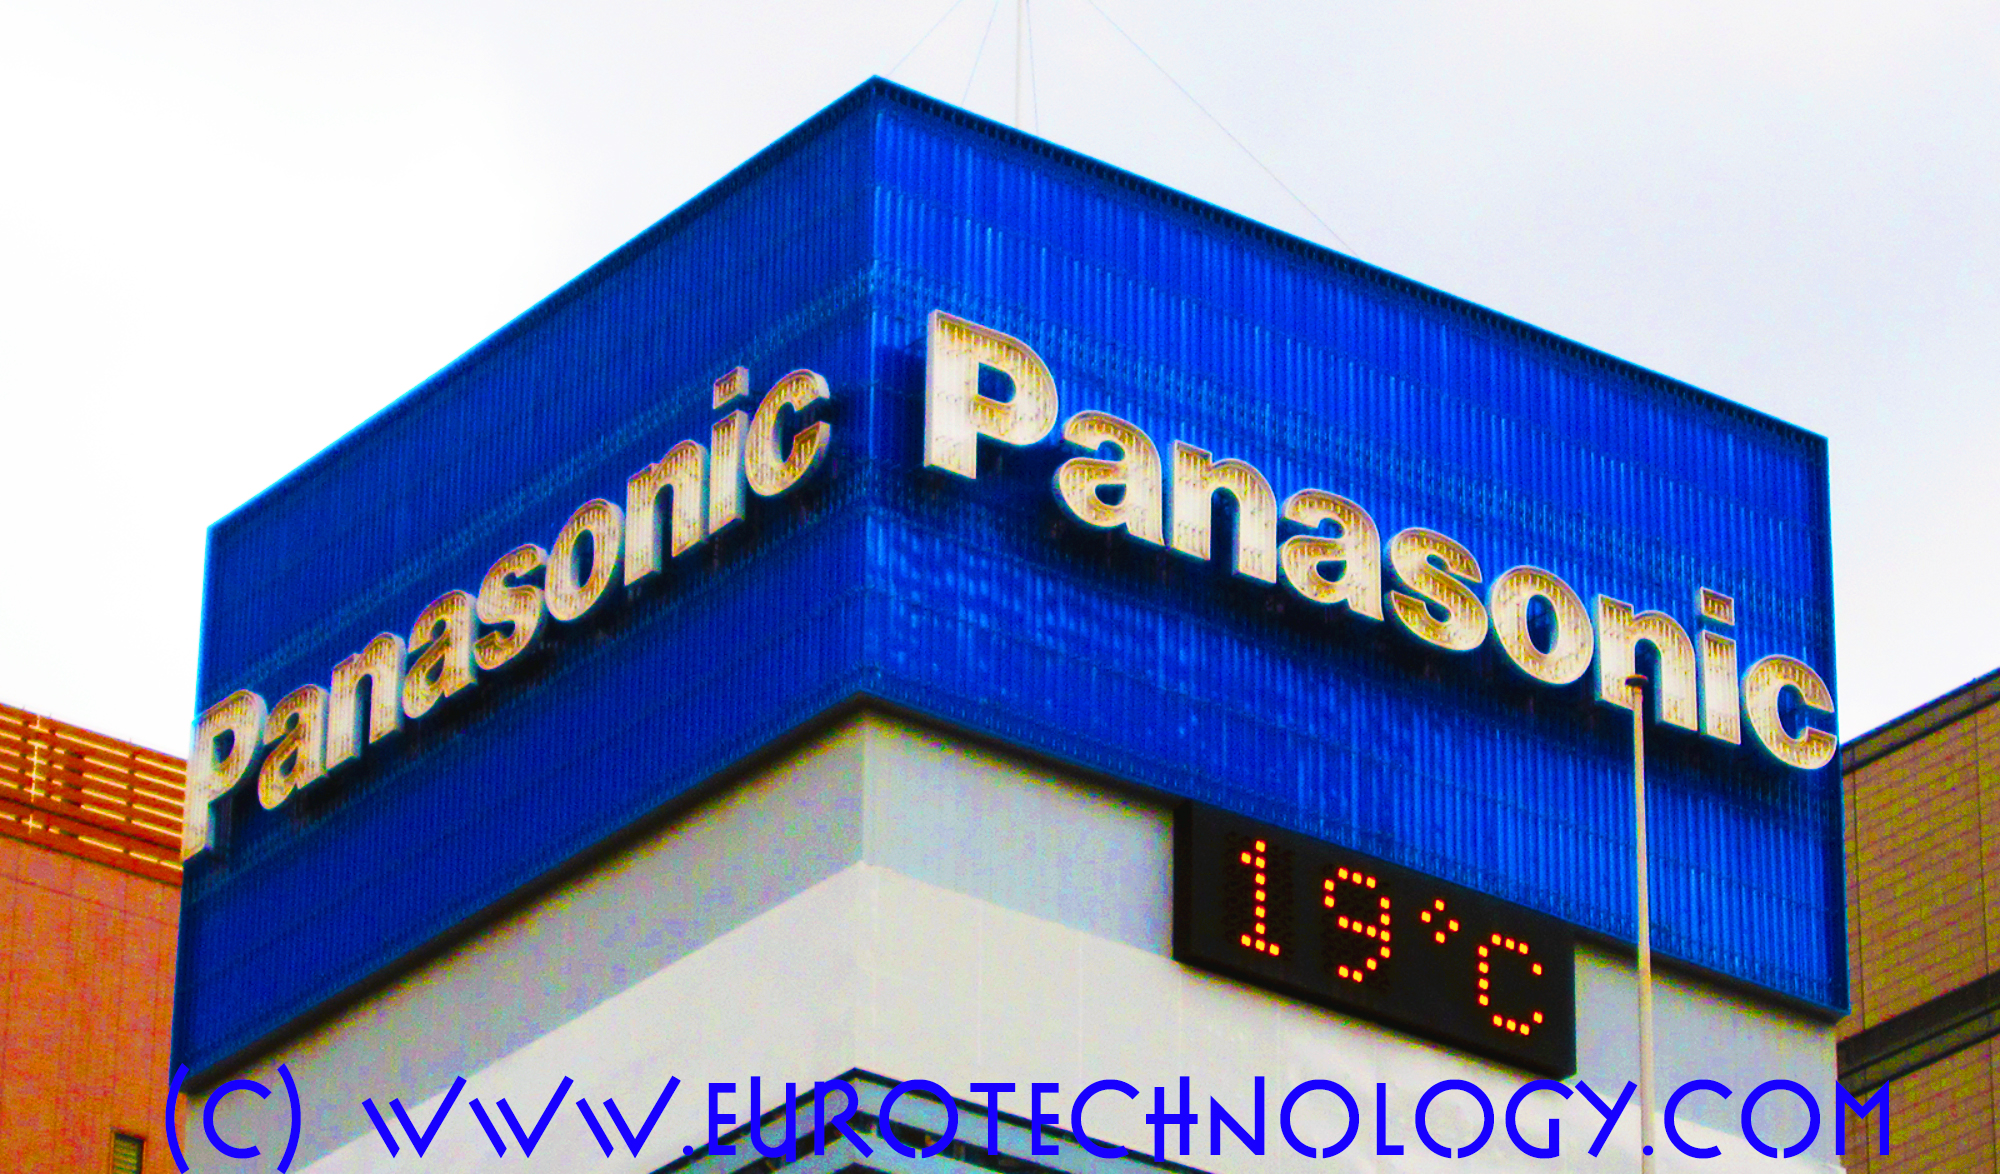 Panasonic self-driving car technology: Ficosa investment